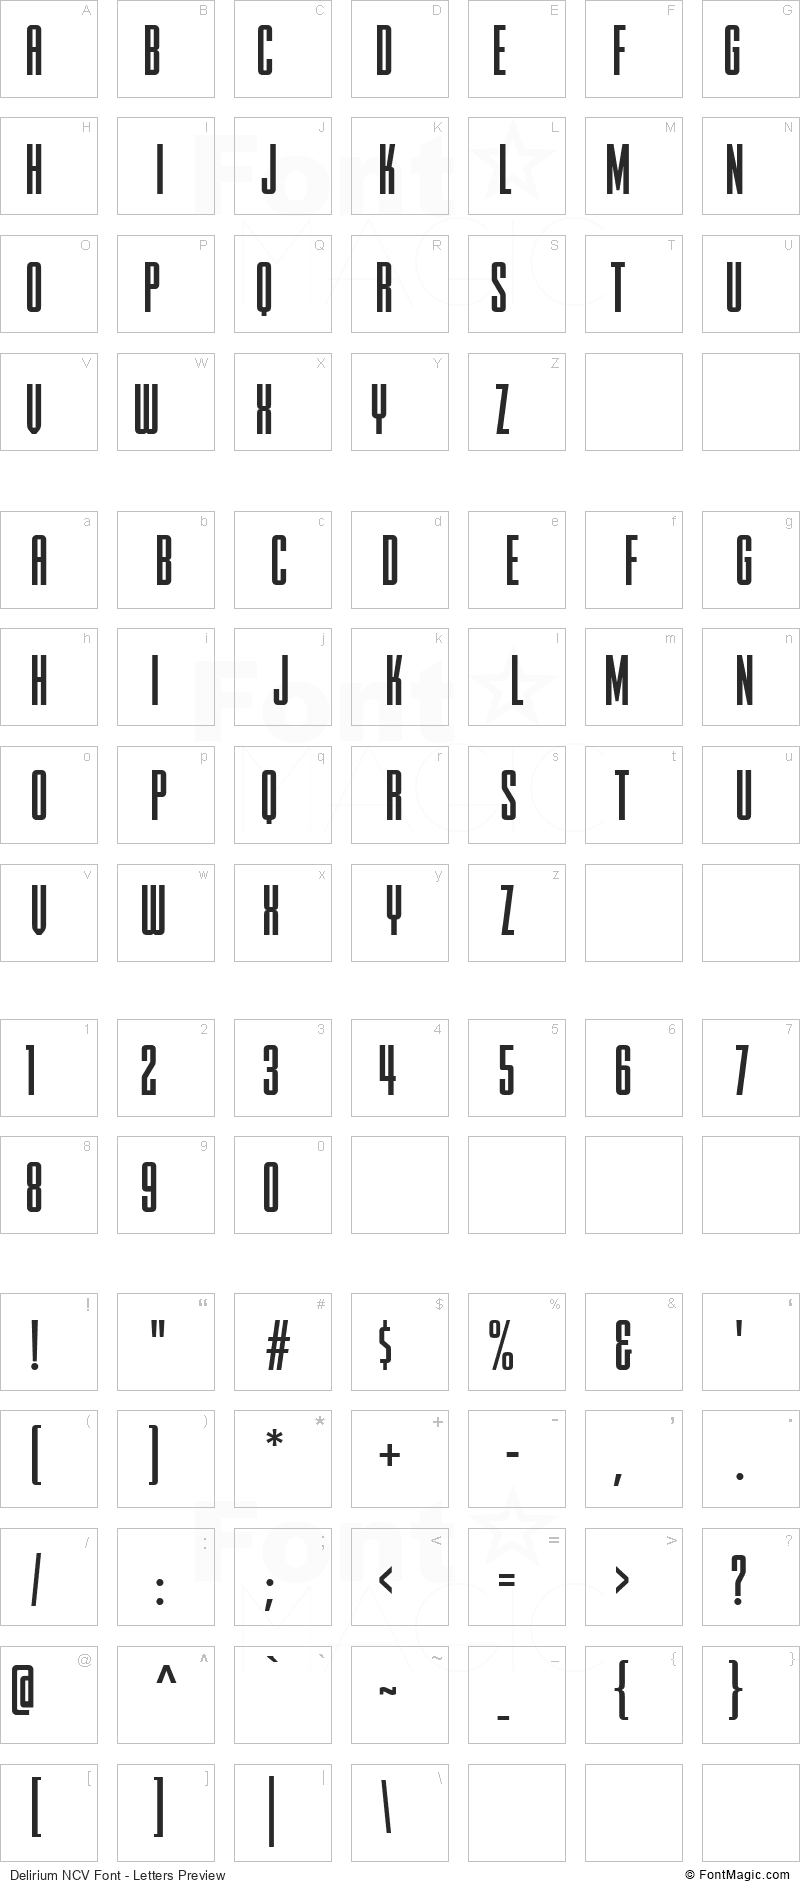 Delirium NCV Font - All Latters Preview Chart